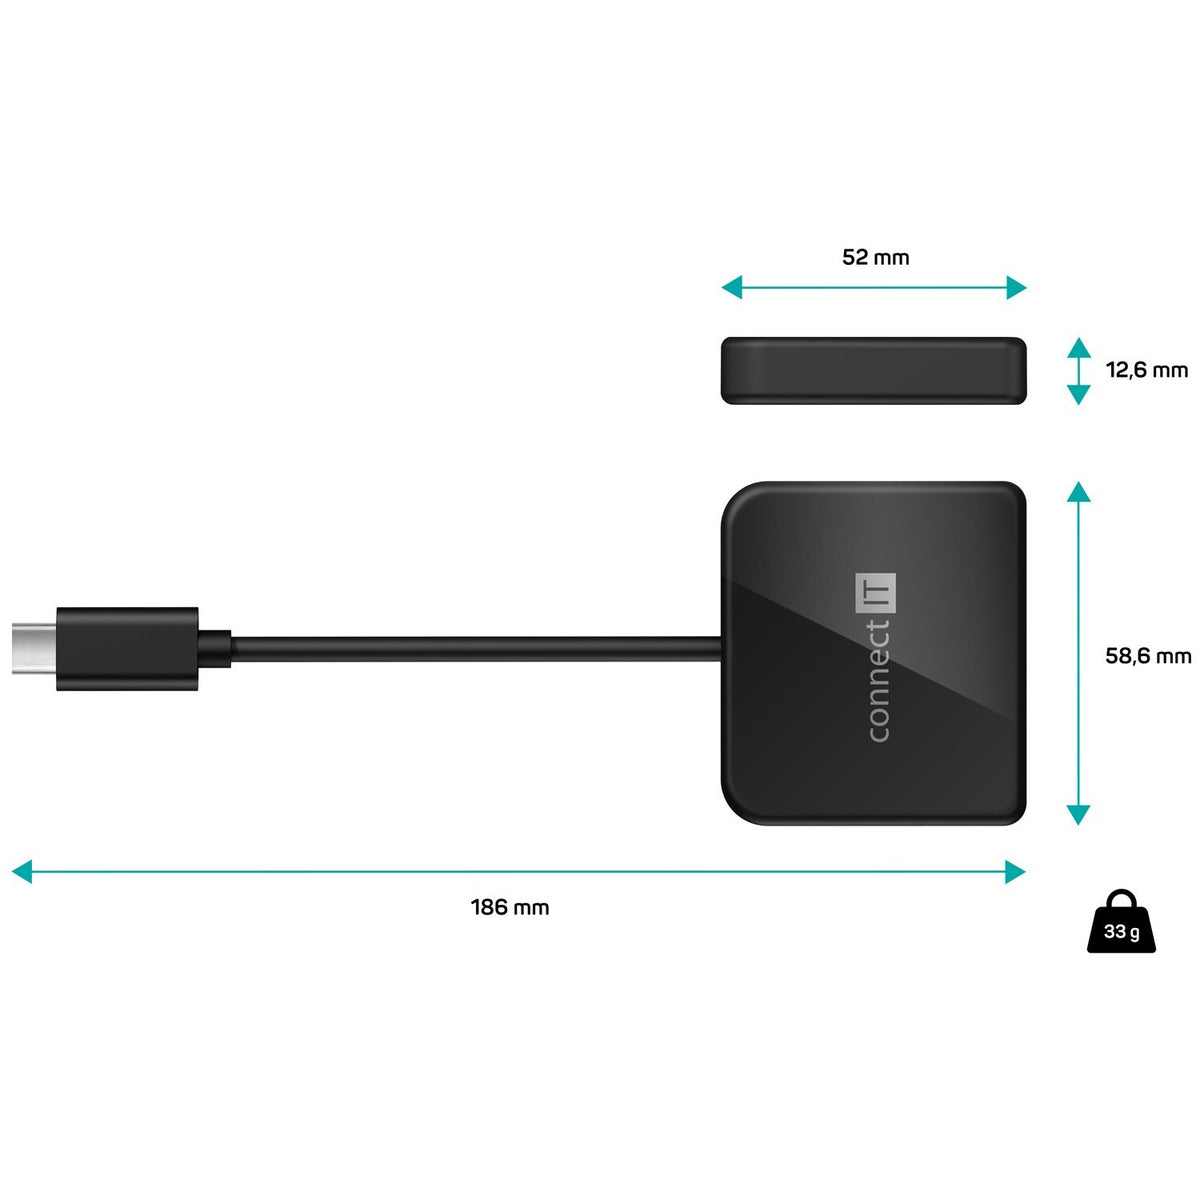 USB-C hub 3v1 Connect It CHU-7050-BK